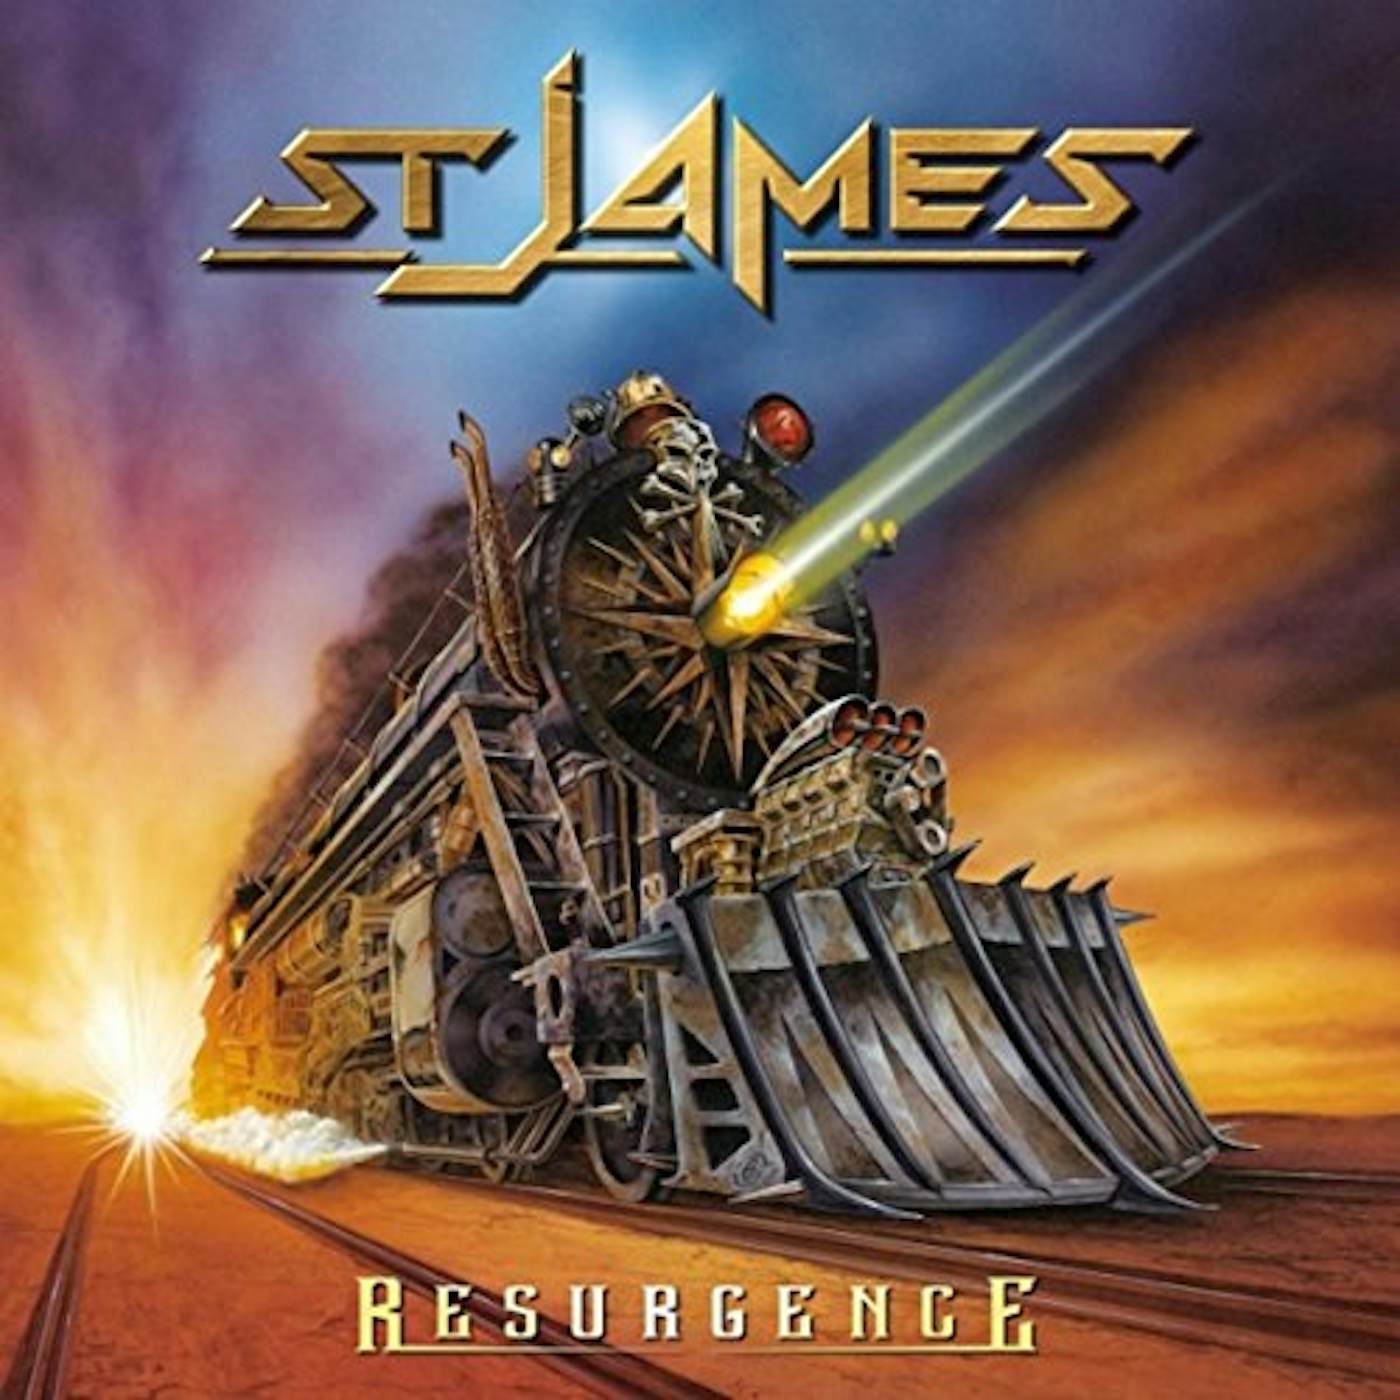 St James Resurgence Vinyl Record